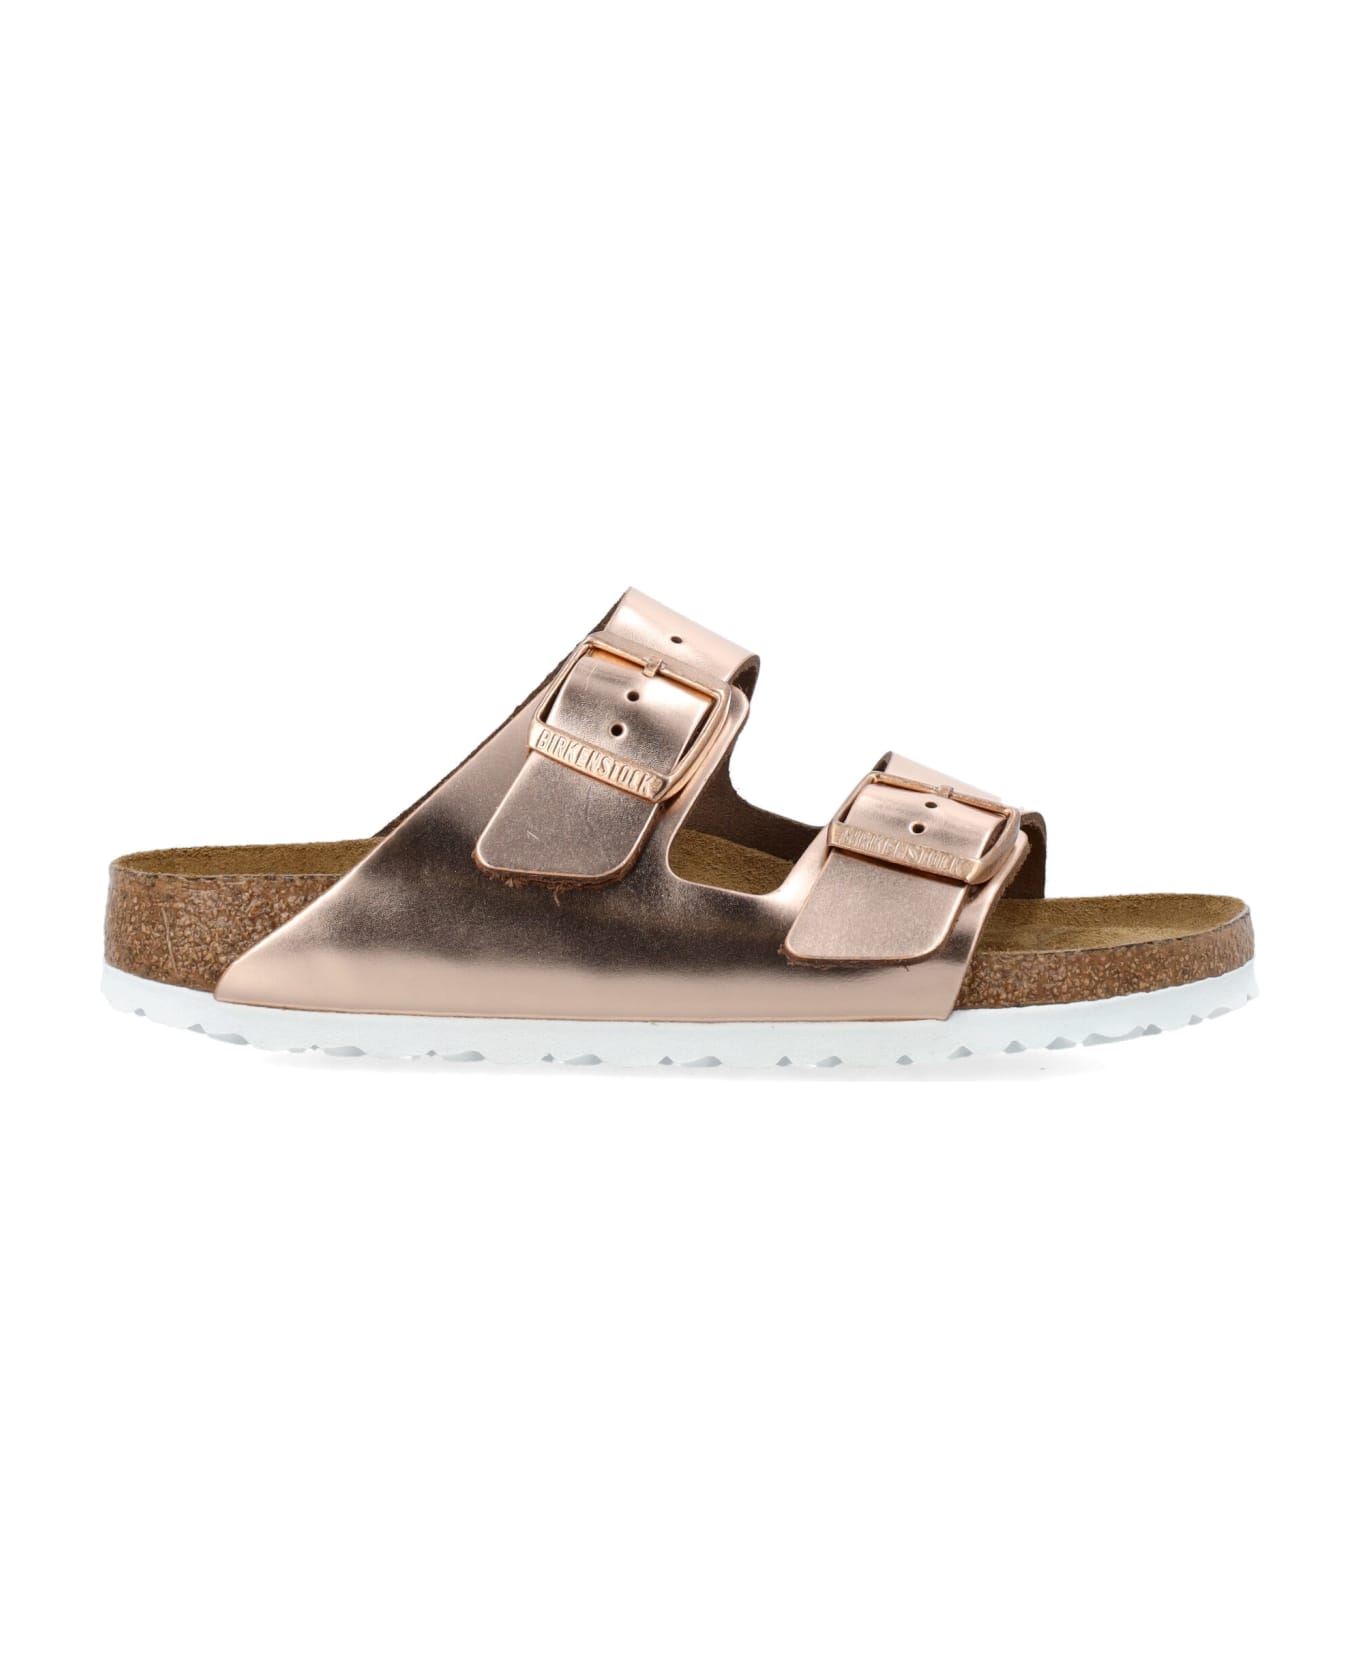 Birkenstock Arizona Metallic Sandals - COPPER サンダル